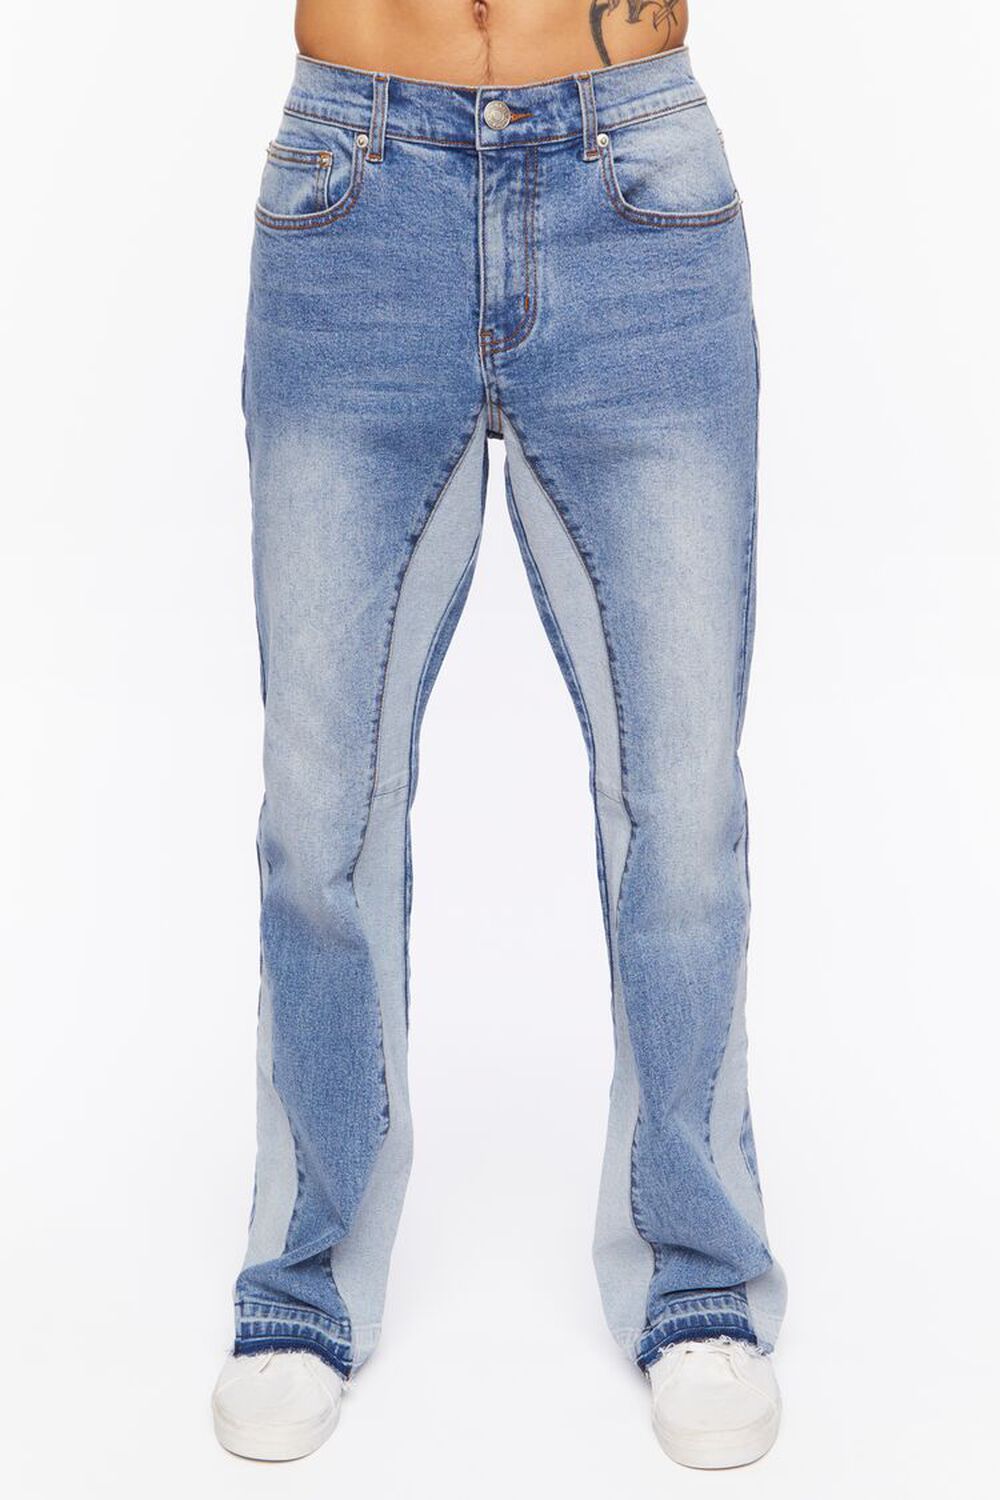 MEDIUM DENIM Stone Wash Flare Jeans, image 2